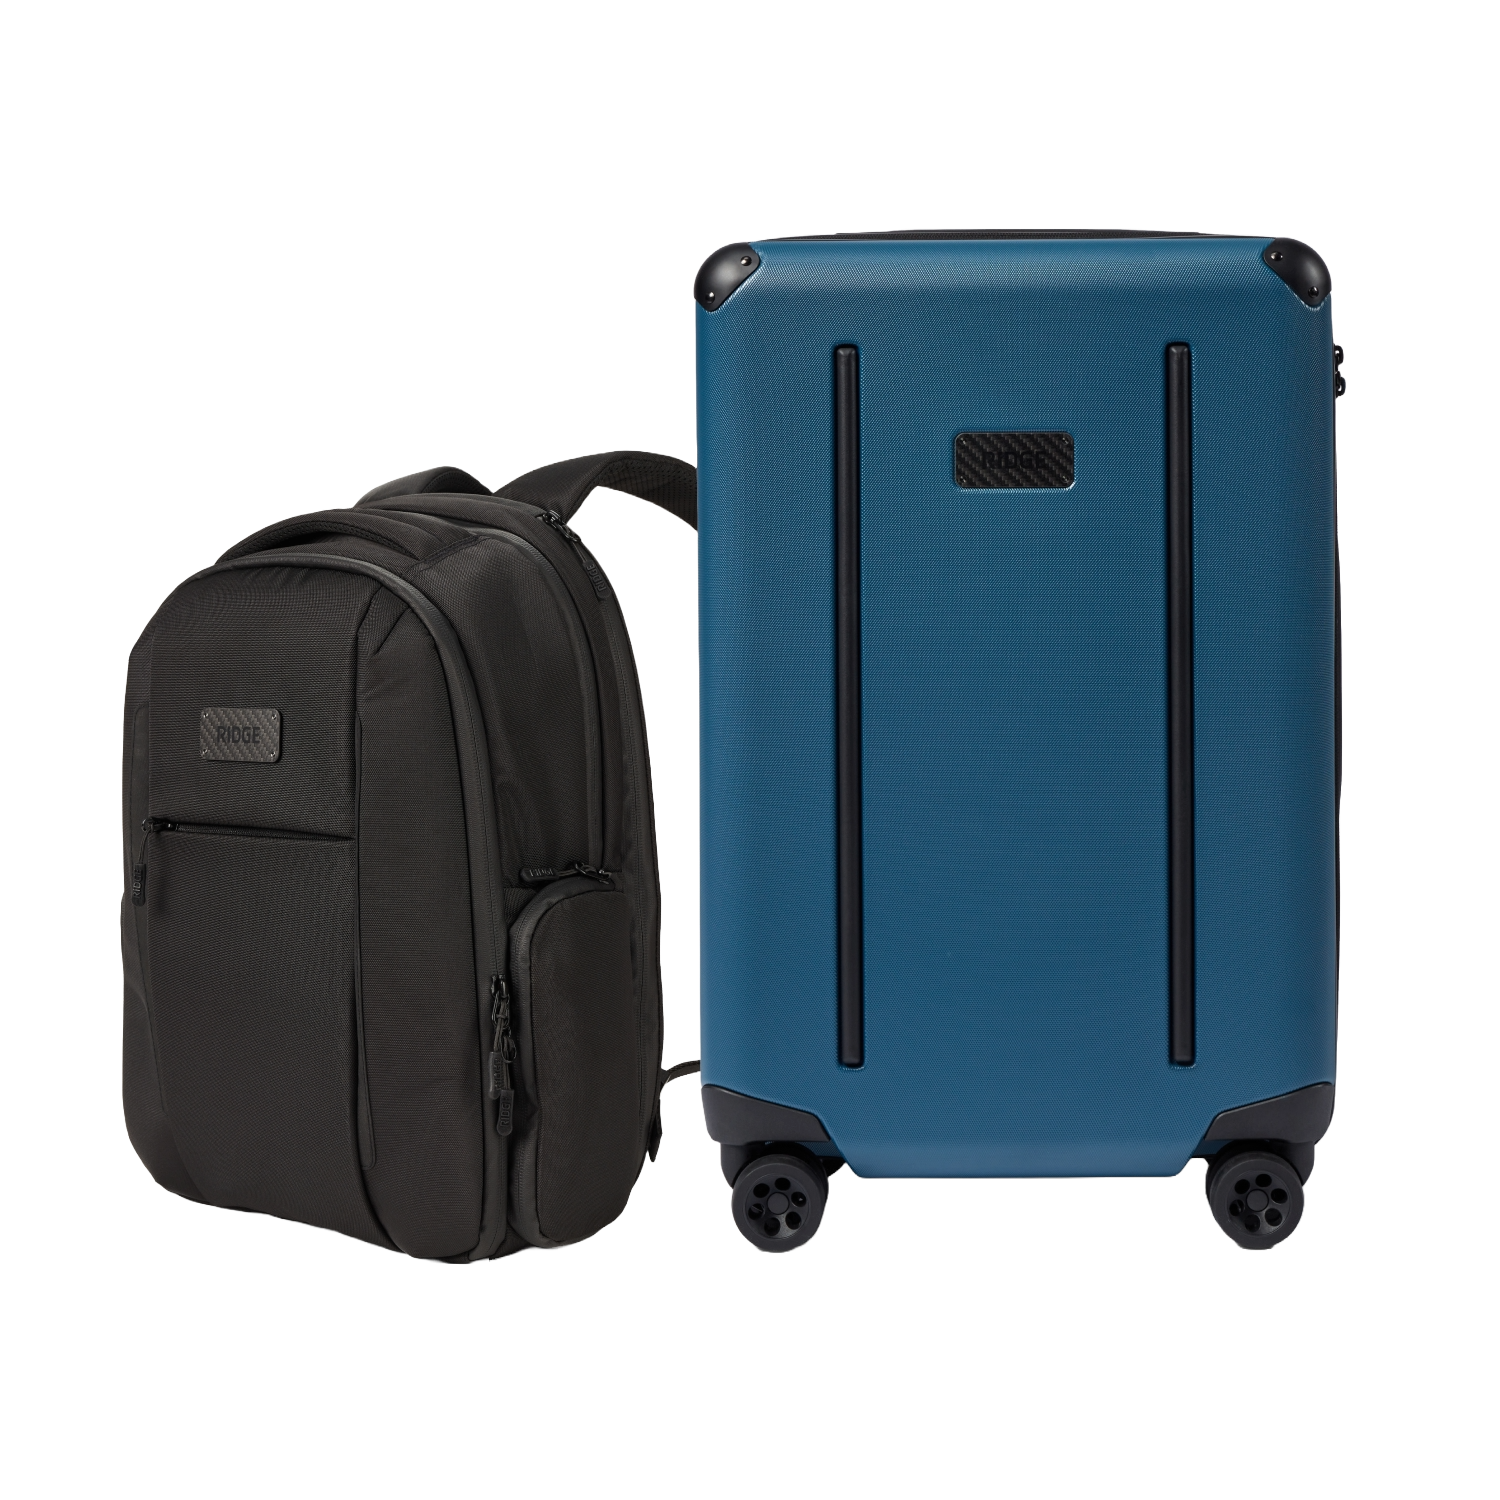 Luggage Bag PNG Transparent Images Free Download | Vector Files | Pngtree